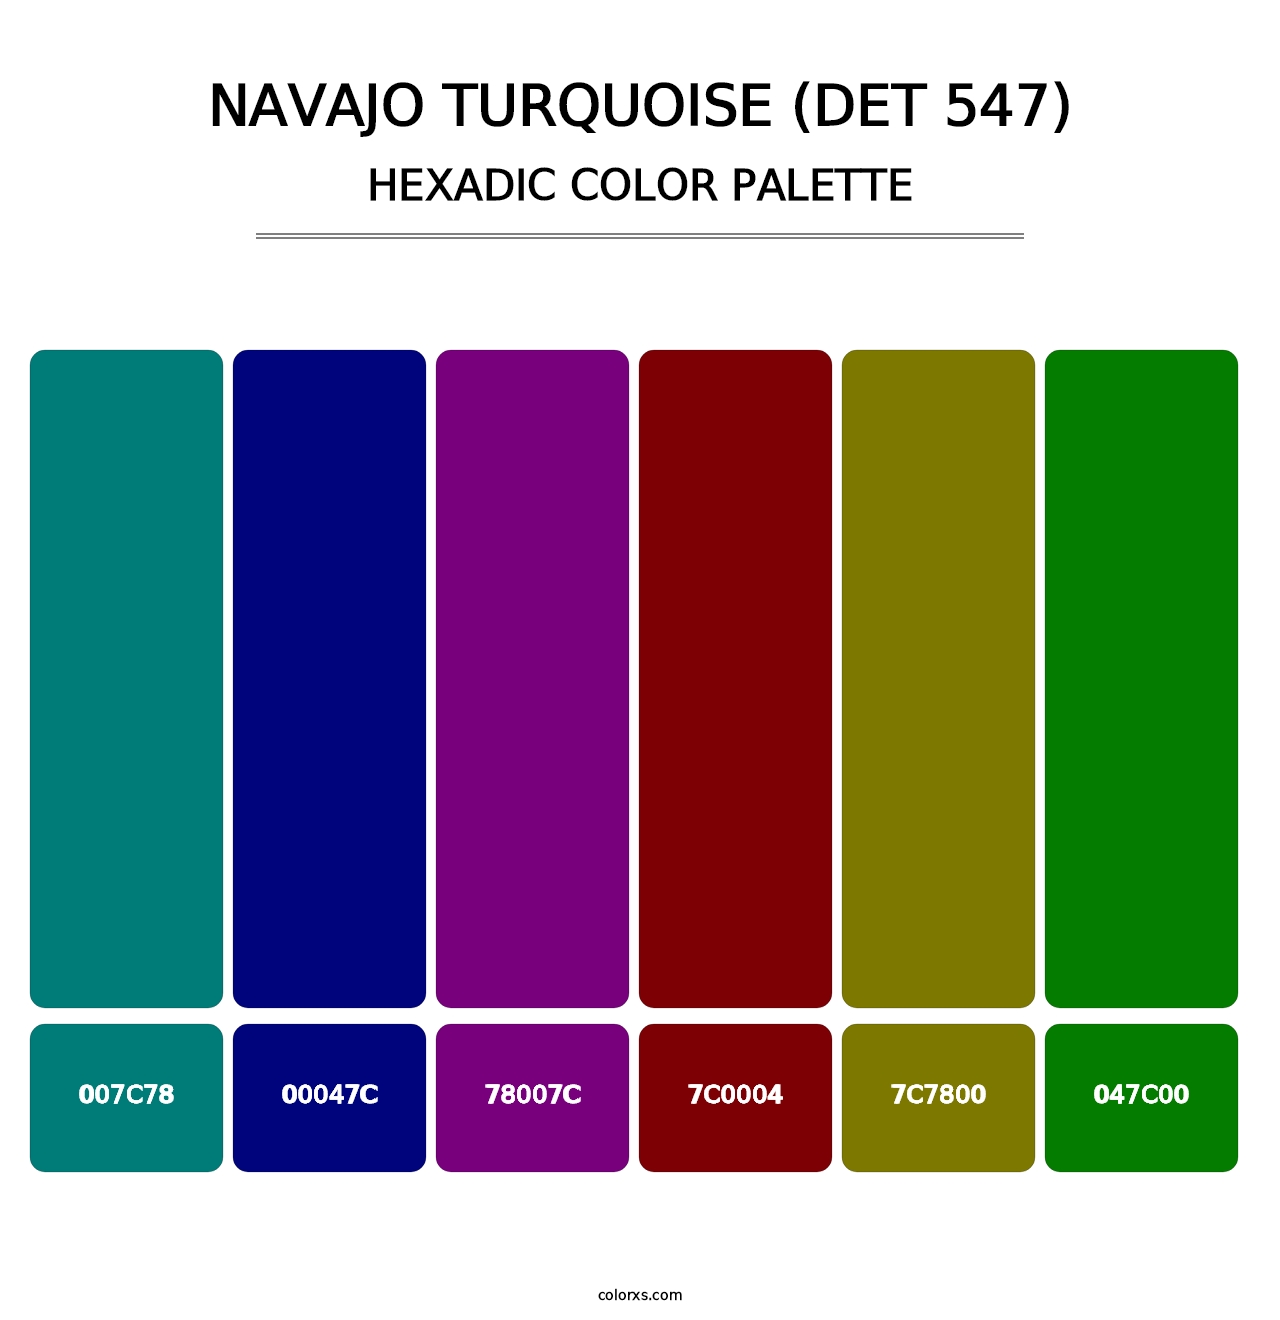 Navajo Turquoise (DET 547) - Hexadic Color Palette